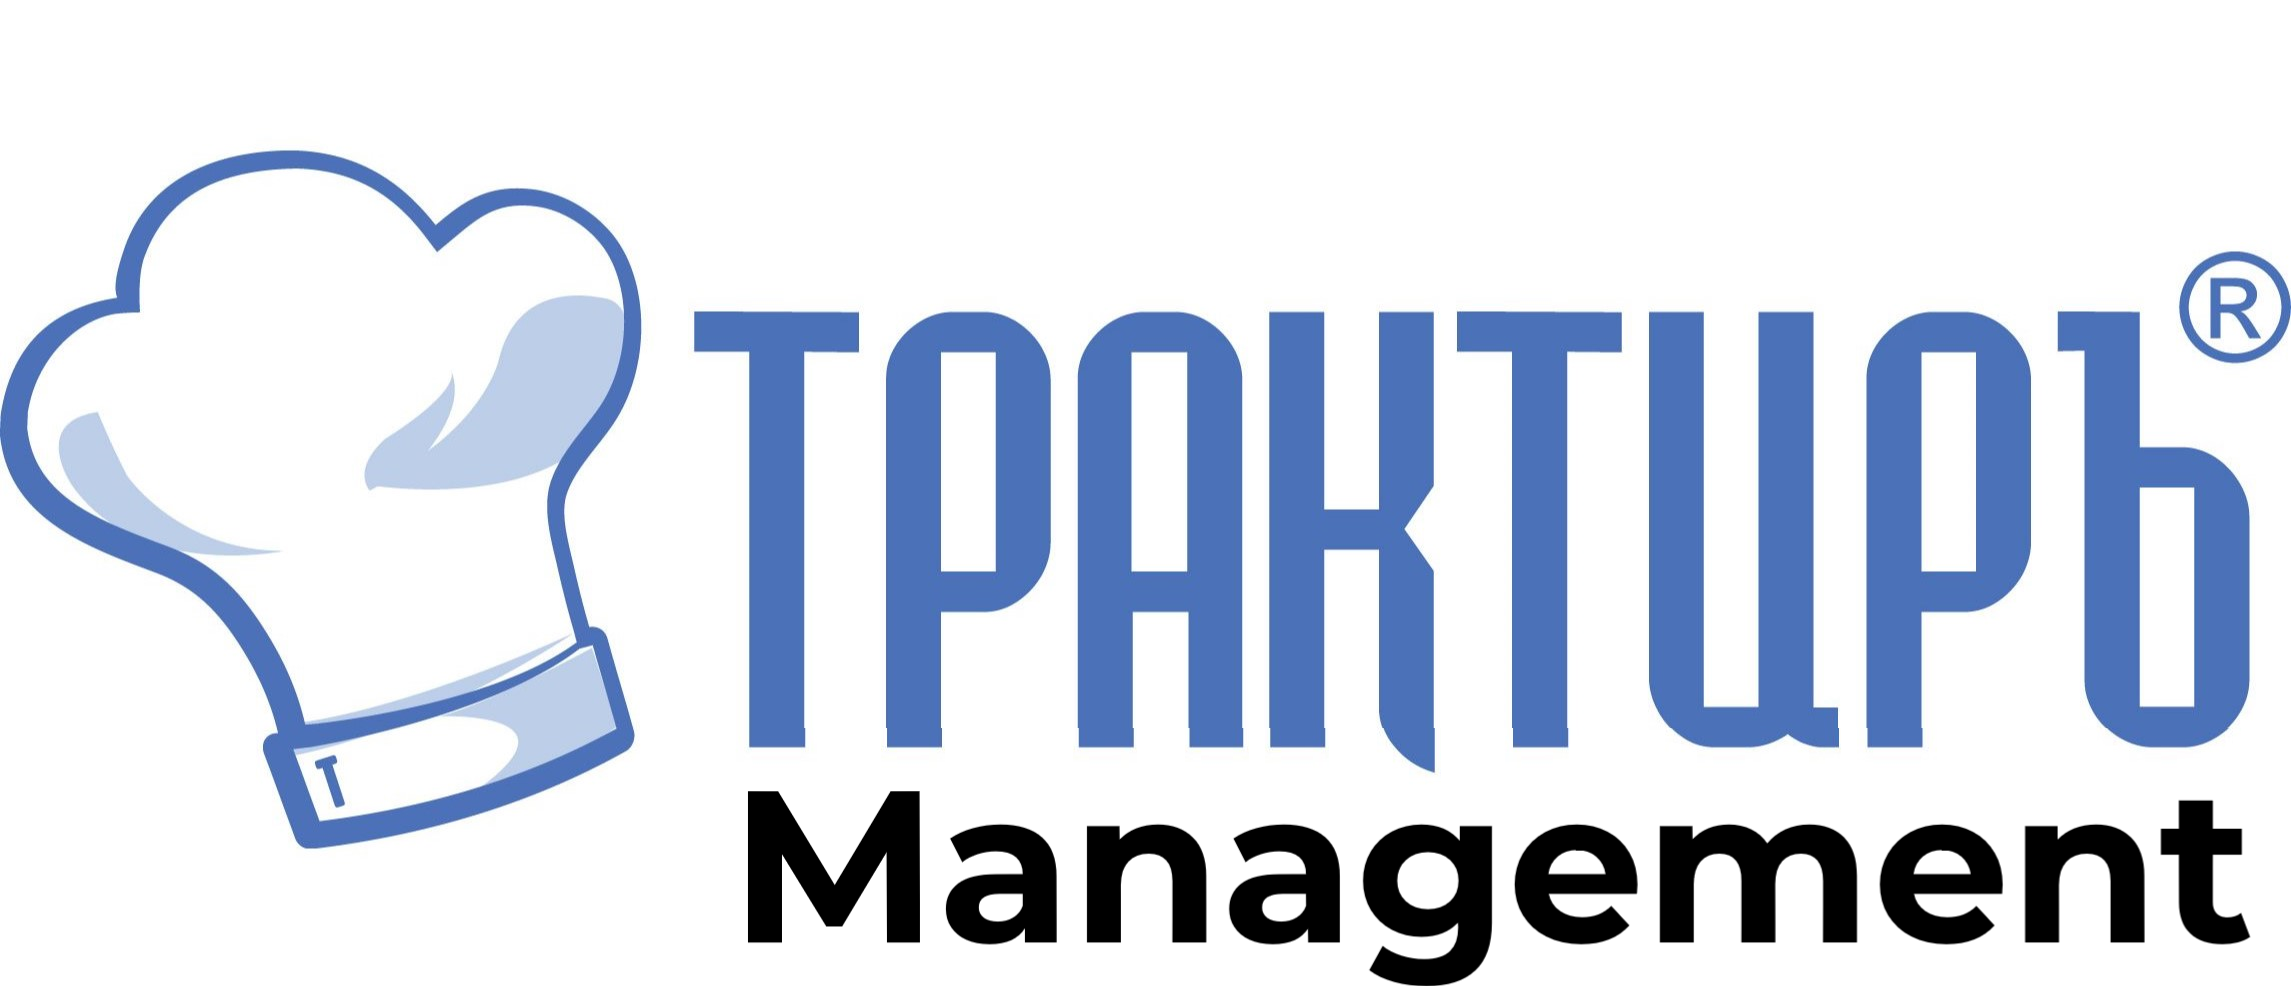 Трактиръ: Management в Ставрополе